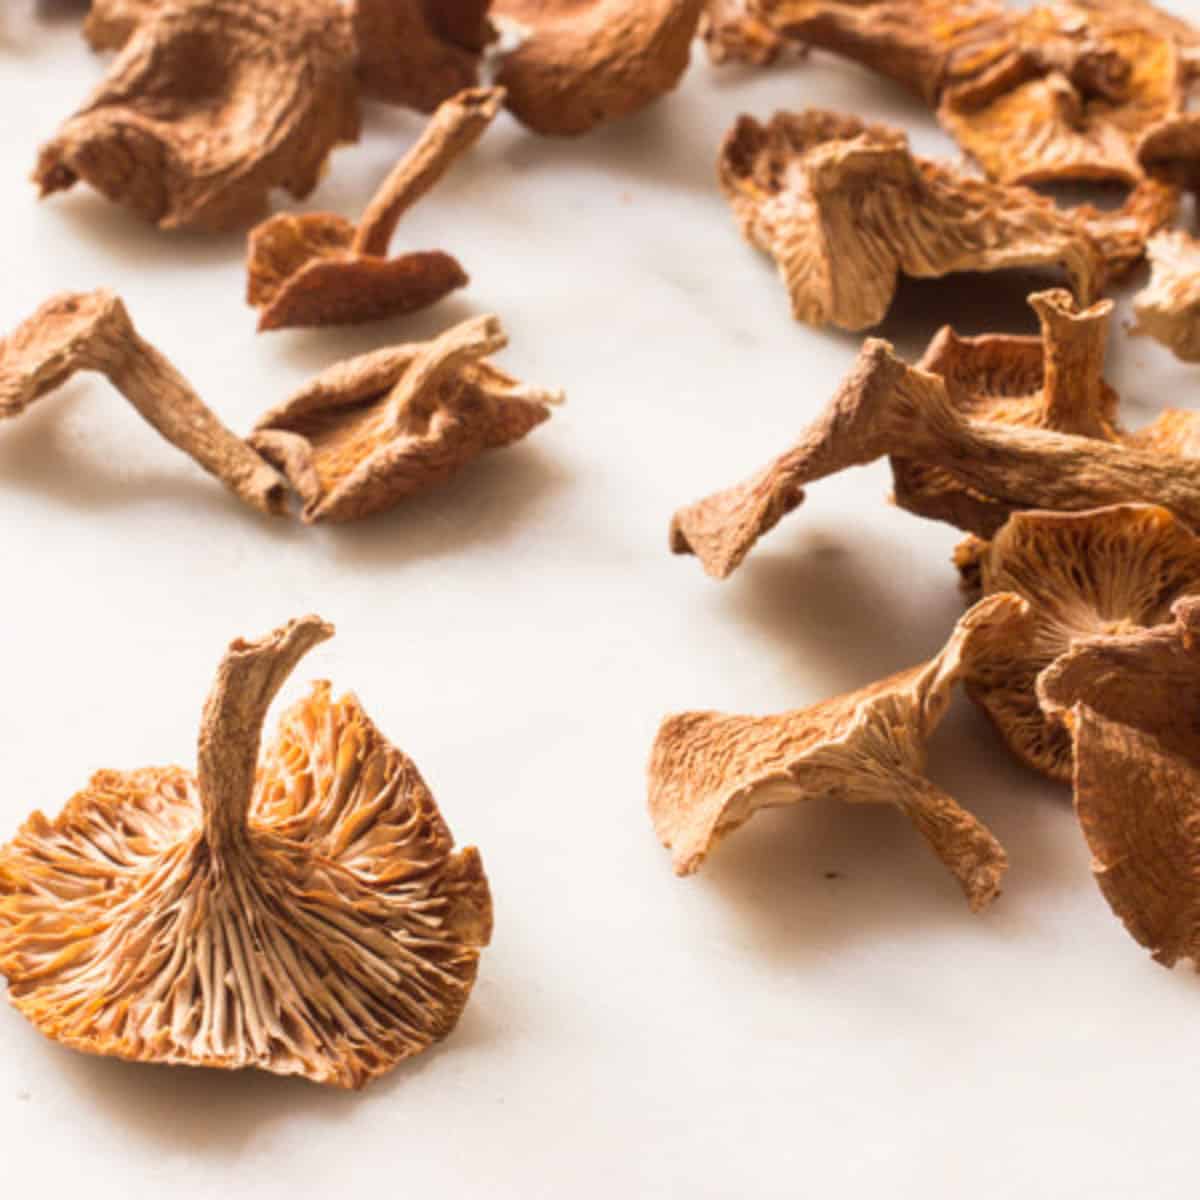 dried candy cap mushrooms